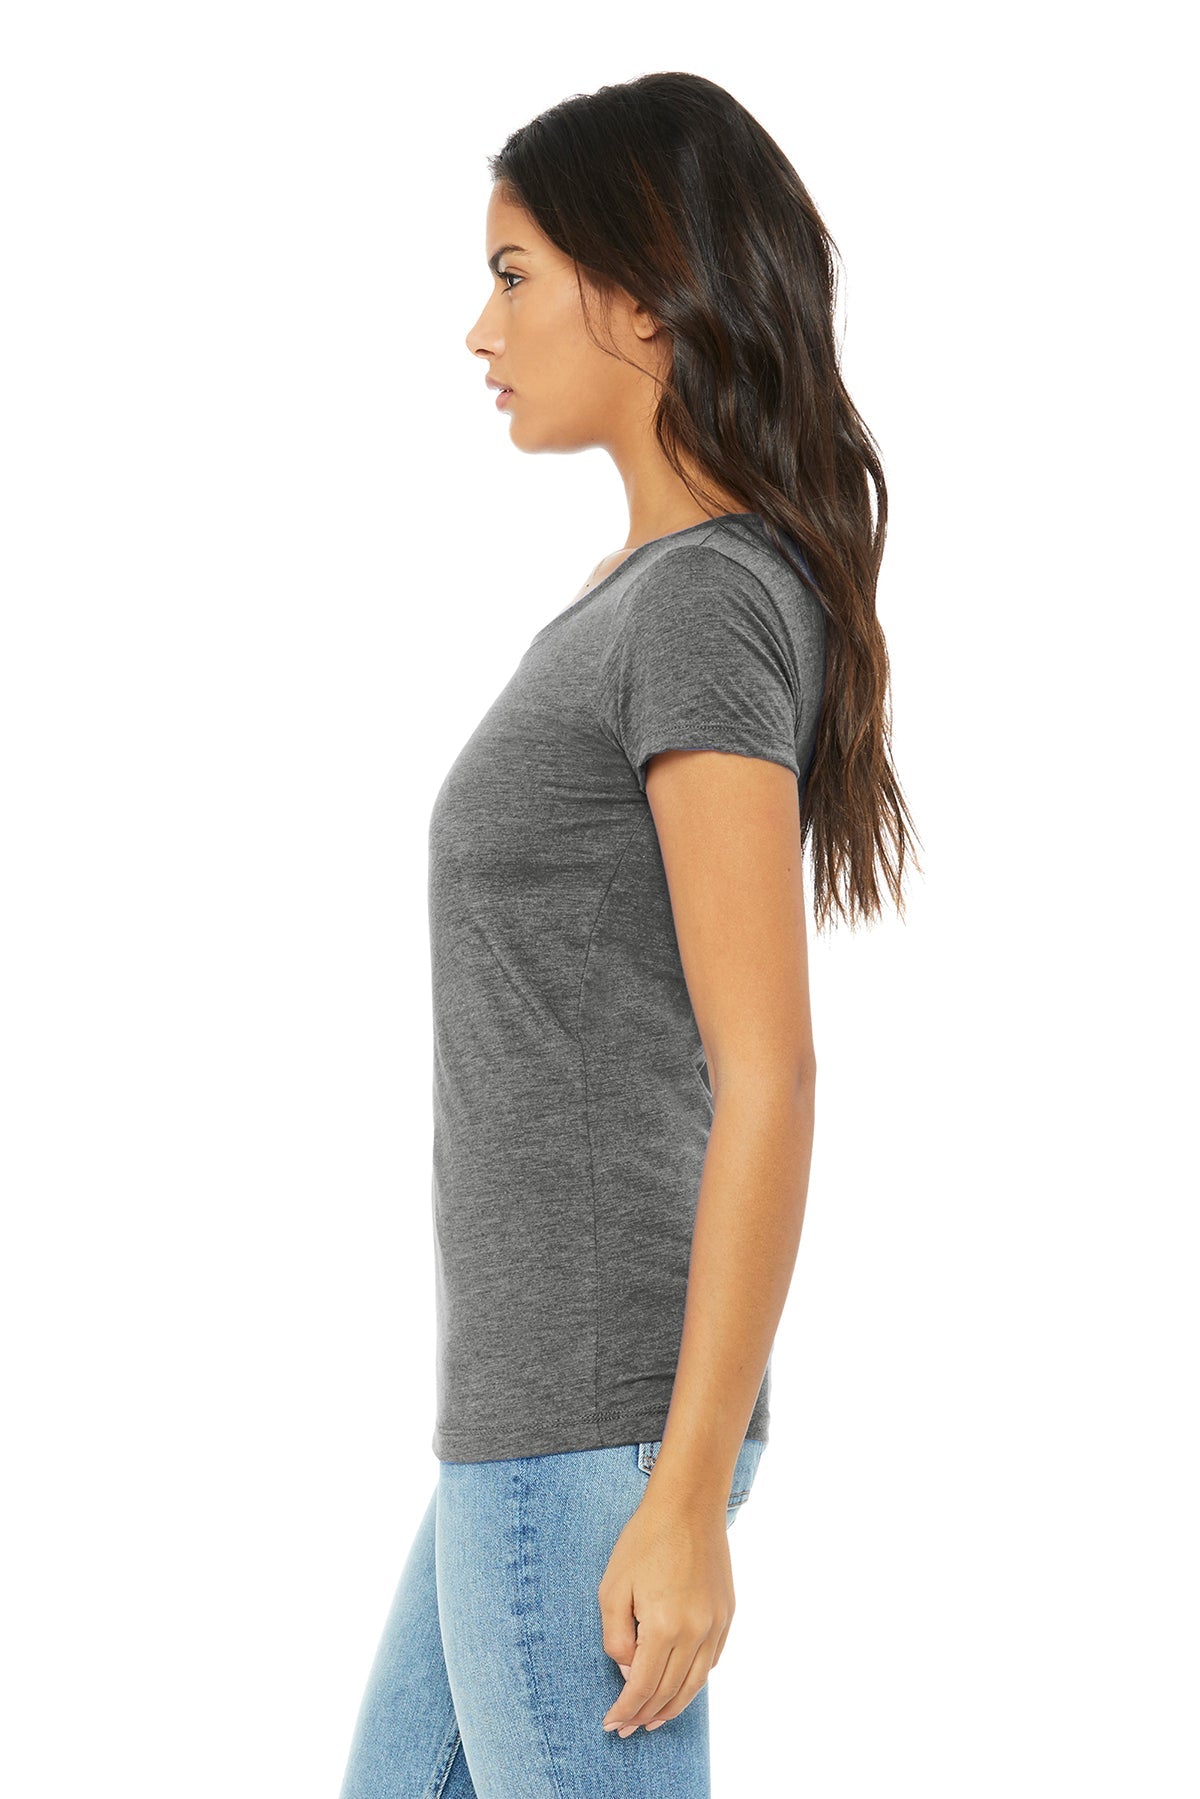 bella + canvas ladies triblend short sleeve t-shirt b8413 grey triblend